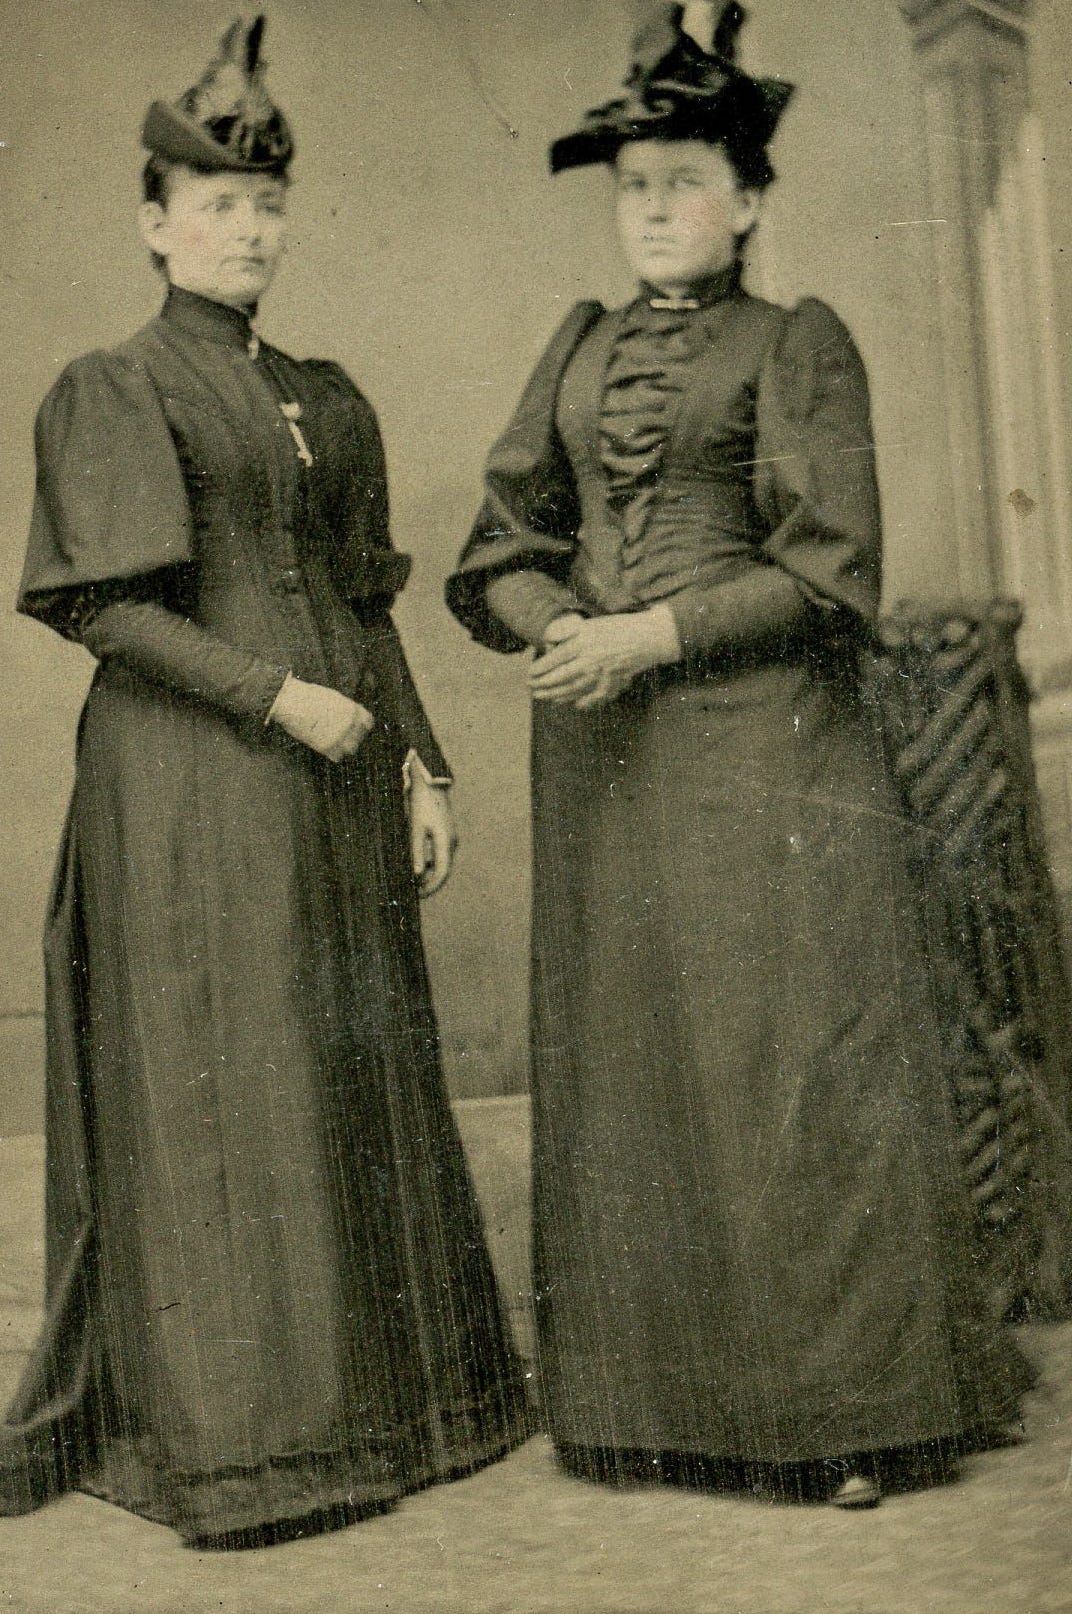 Two woman in portrait photo